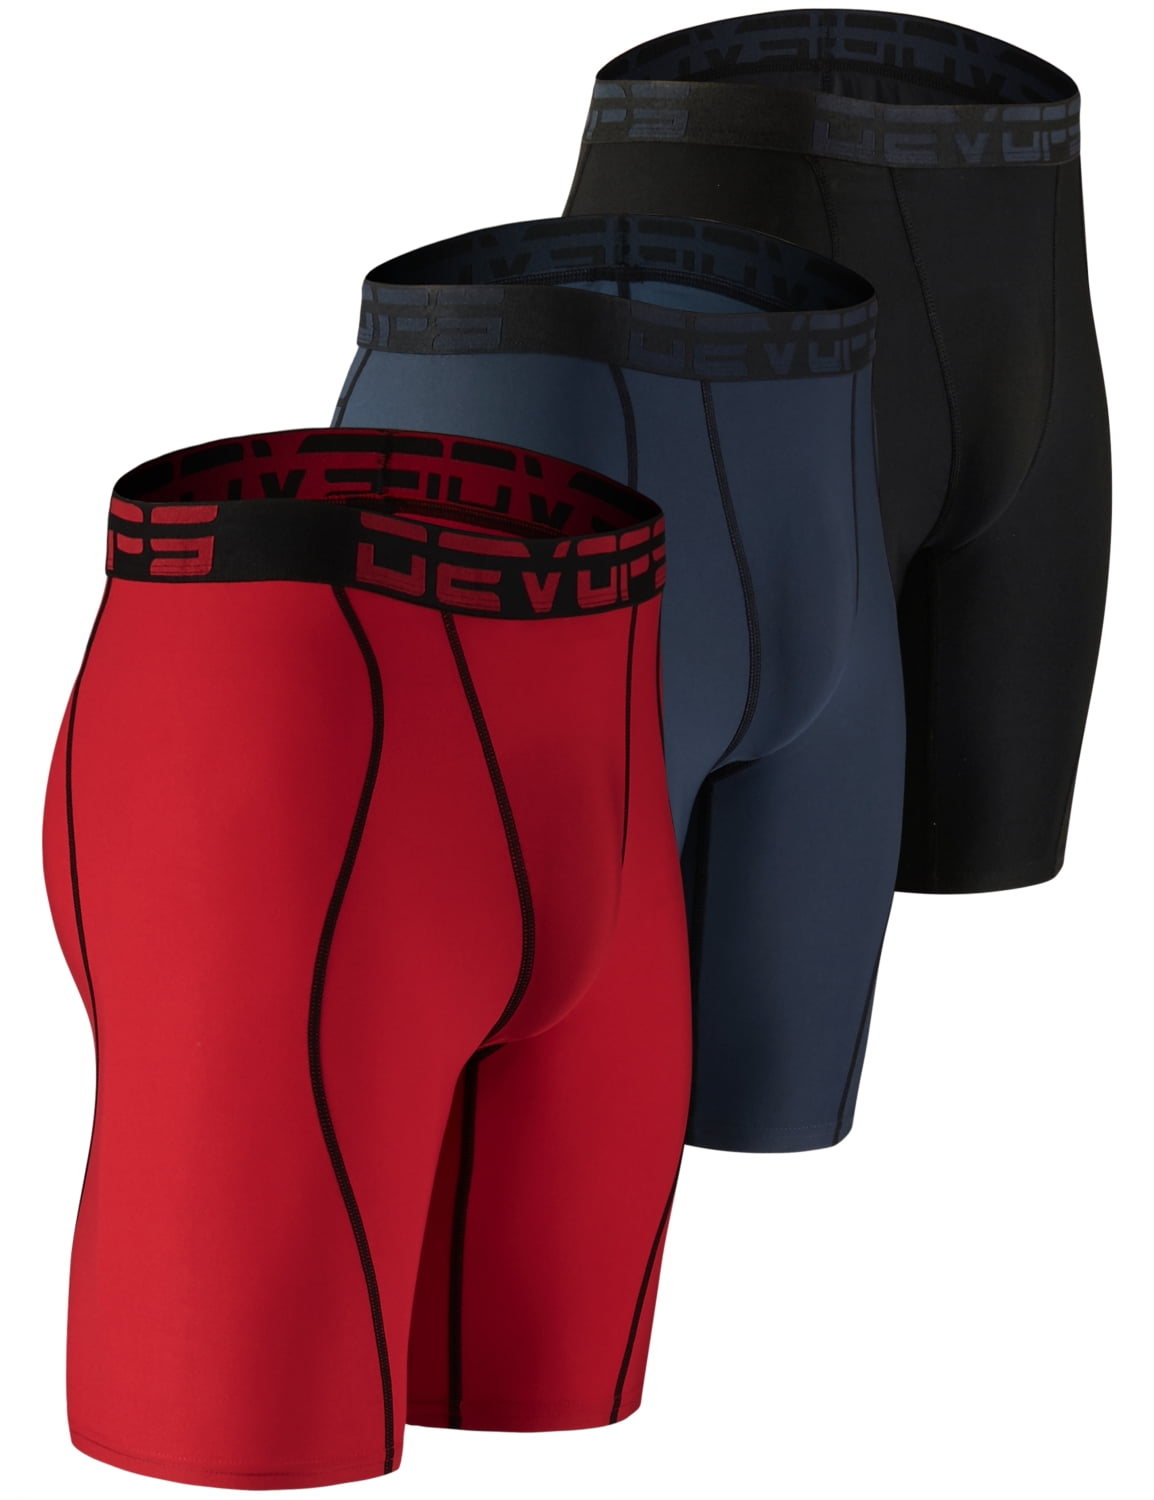 DEVOPS 3 Pack Men's Compression Shorts Underwear (Medium, Black